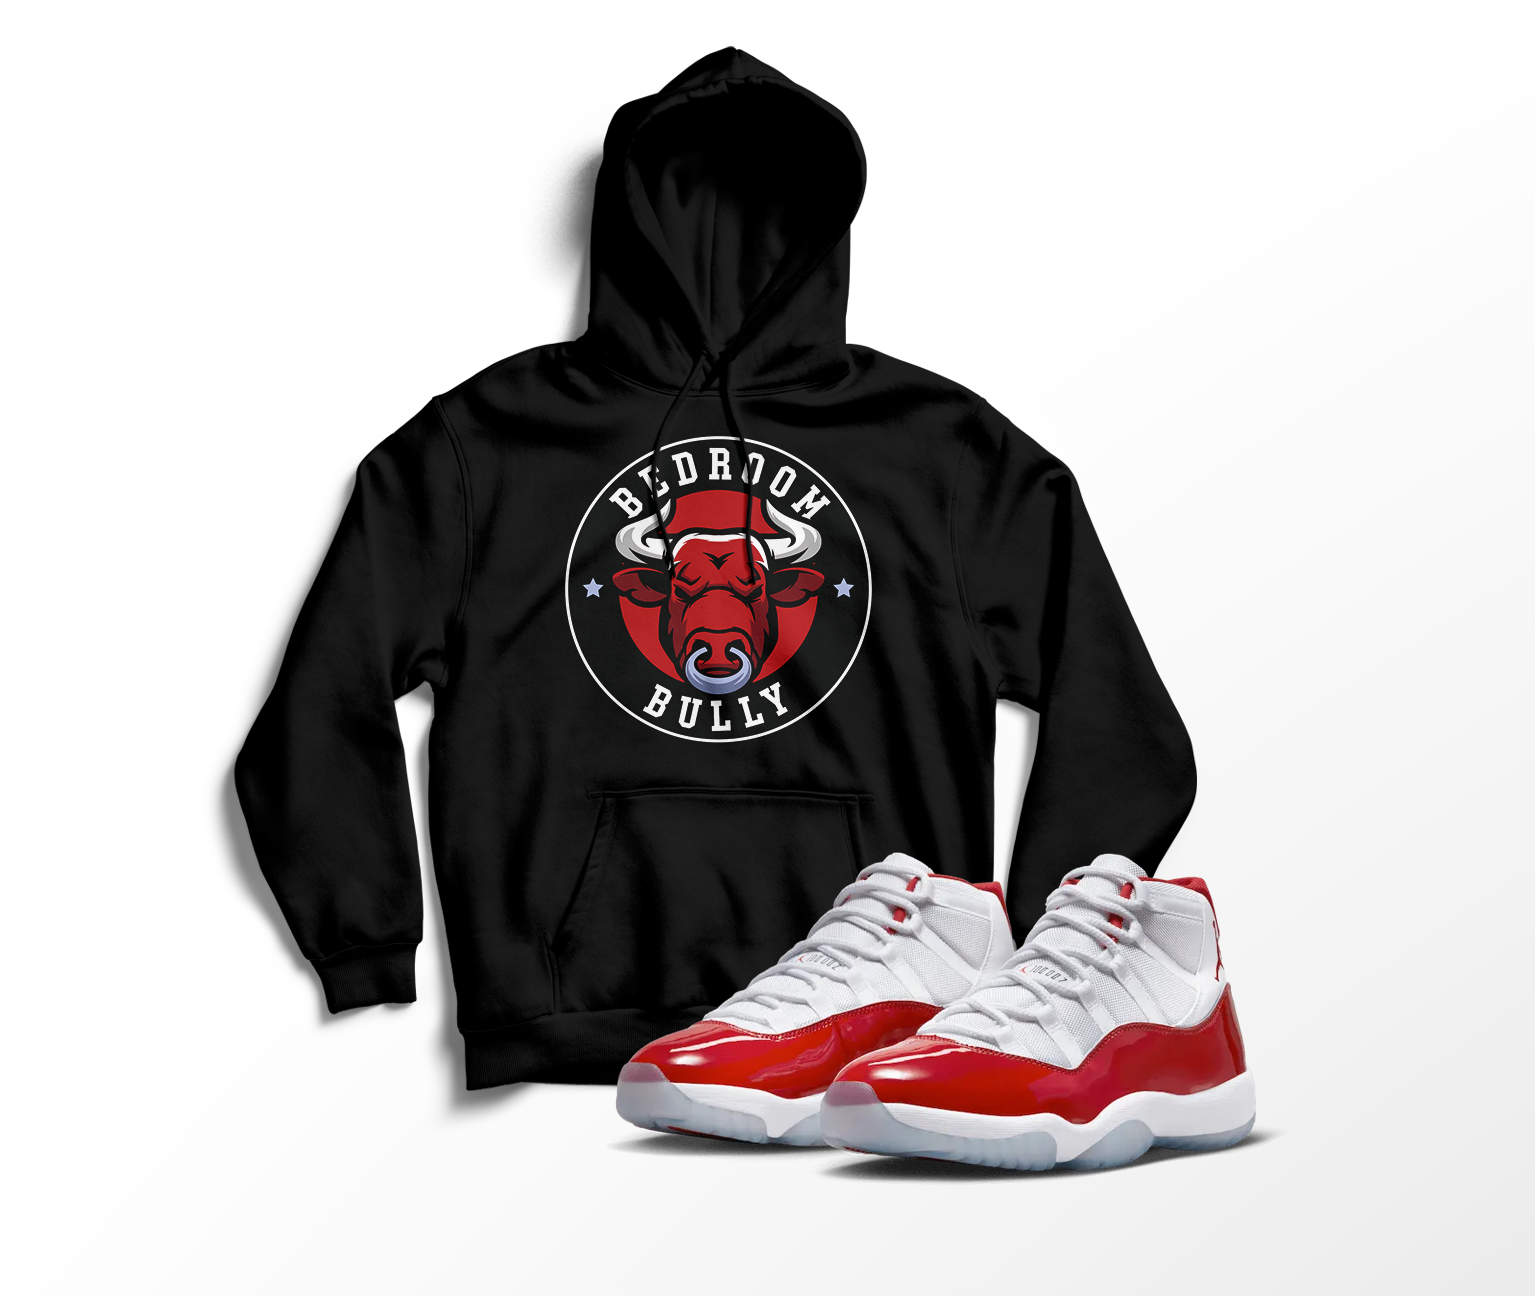 'Bedroom Bully' Custom Graphic Hoodie To Match Air Jordan 11 Cherry Red